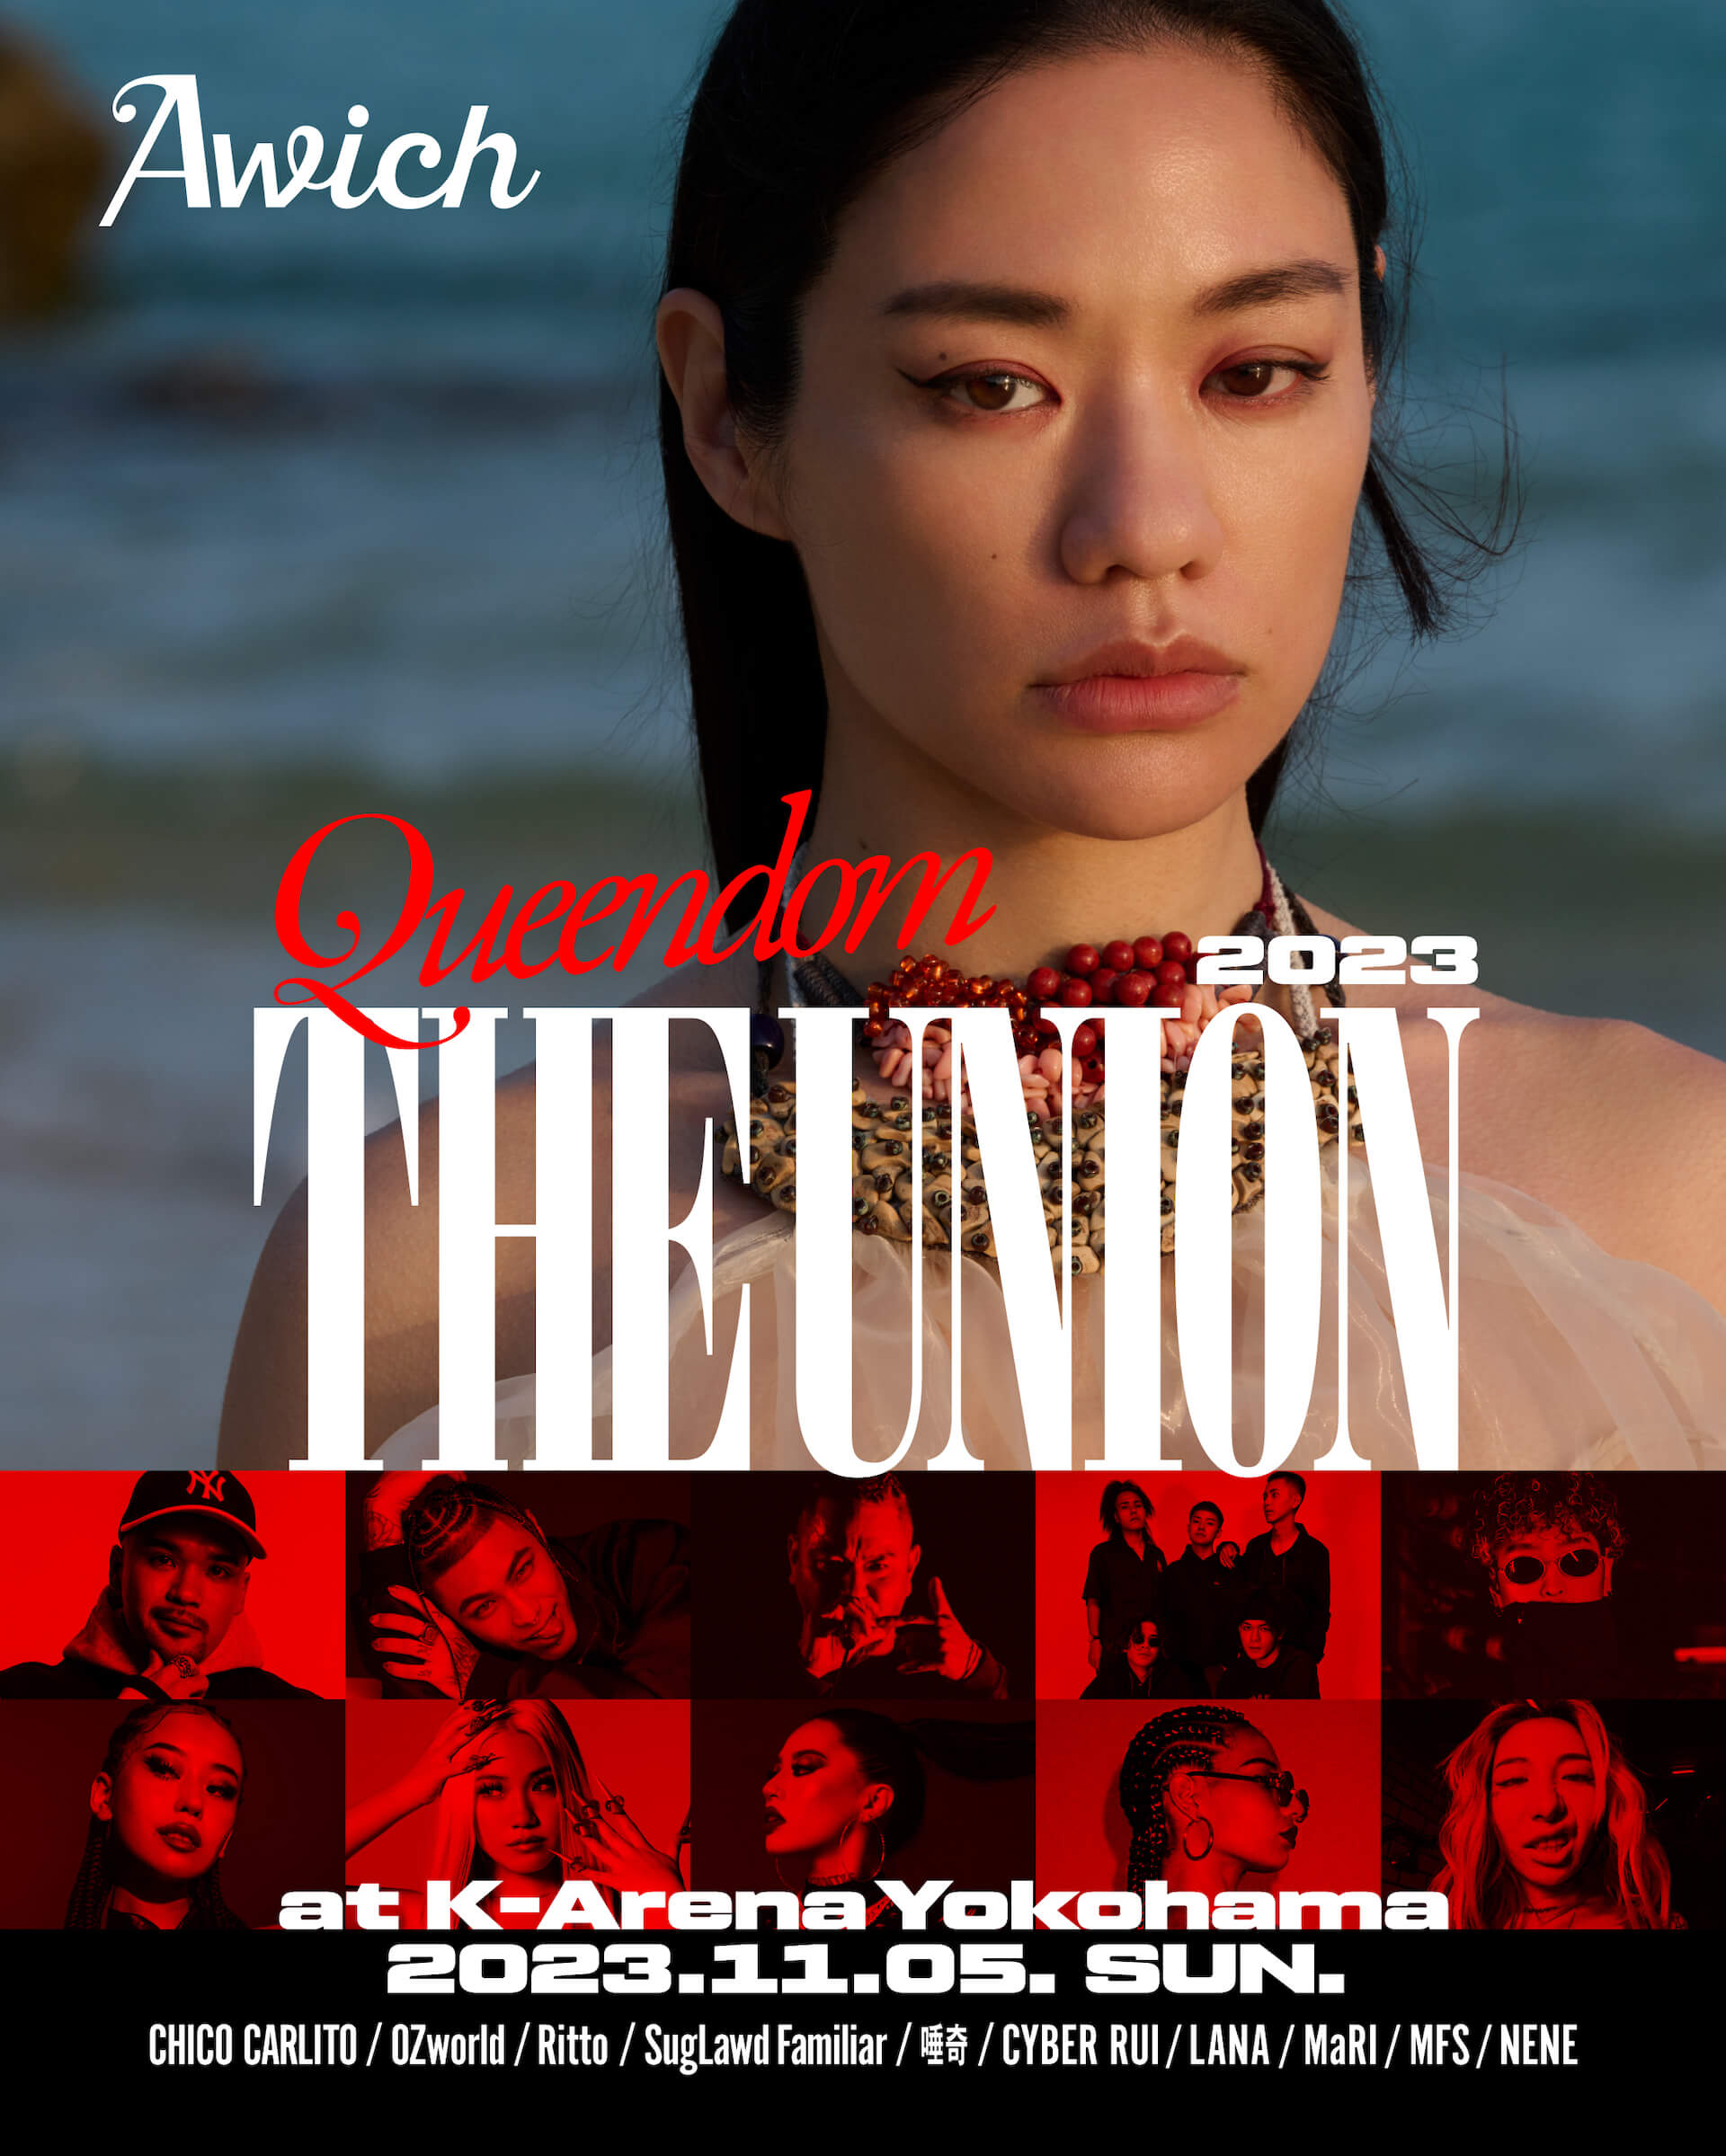 Awich初のアリーナ公演＜Queendom -THE UNION- at K-Arena Yokohama＞にNENE、LANA、MaRI、MFS、CYBER RUIが参加決定 music230726_awich-01